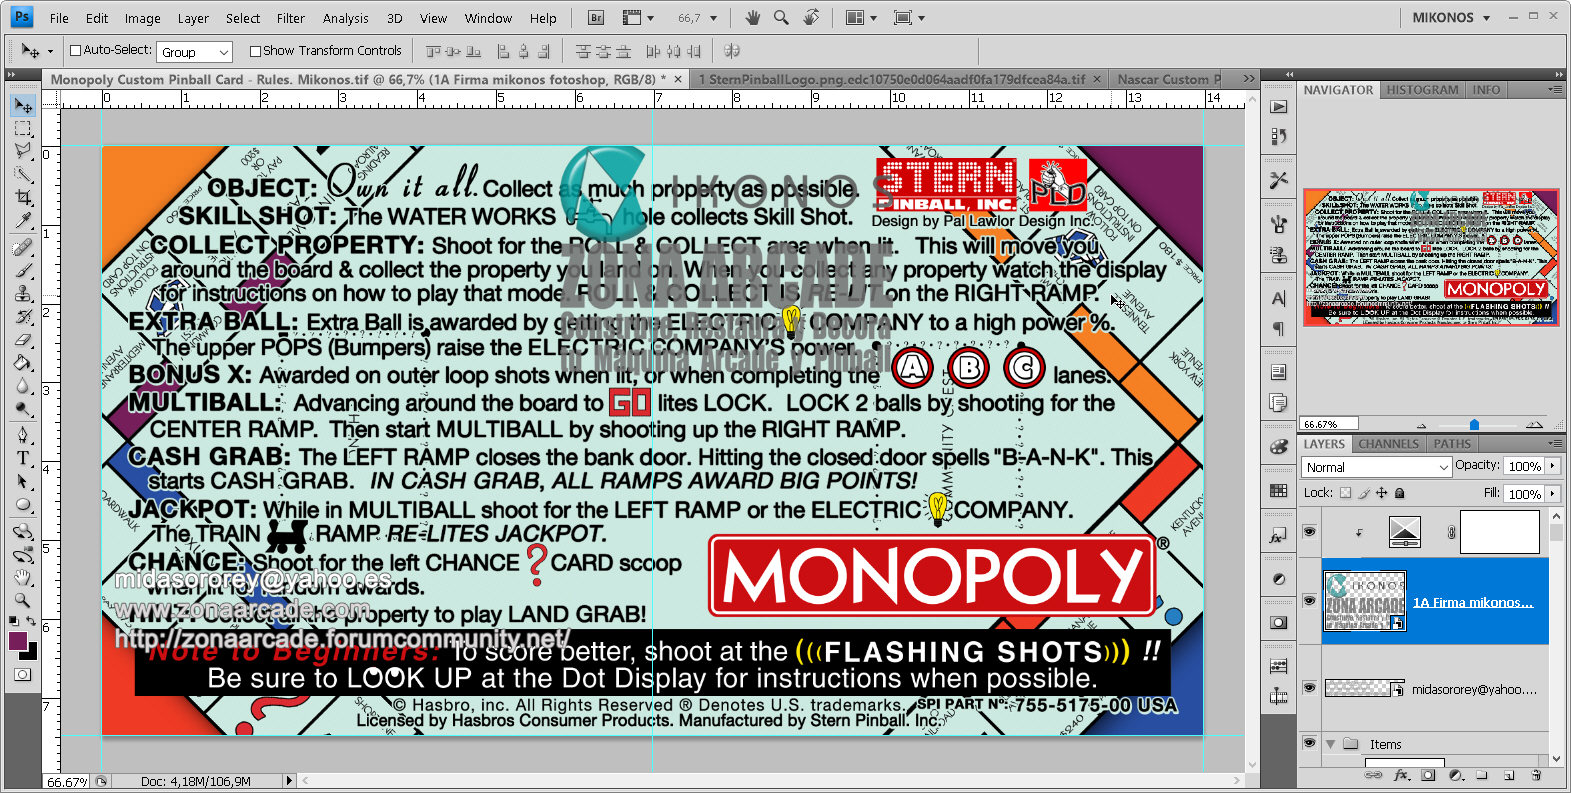 Monopoly Pinball Card Customized - Rules. Mikonos1